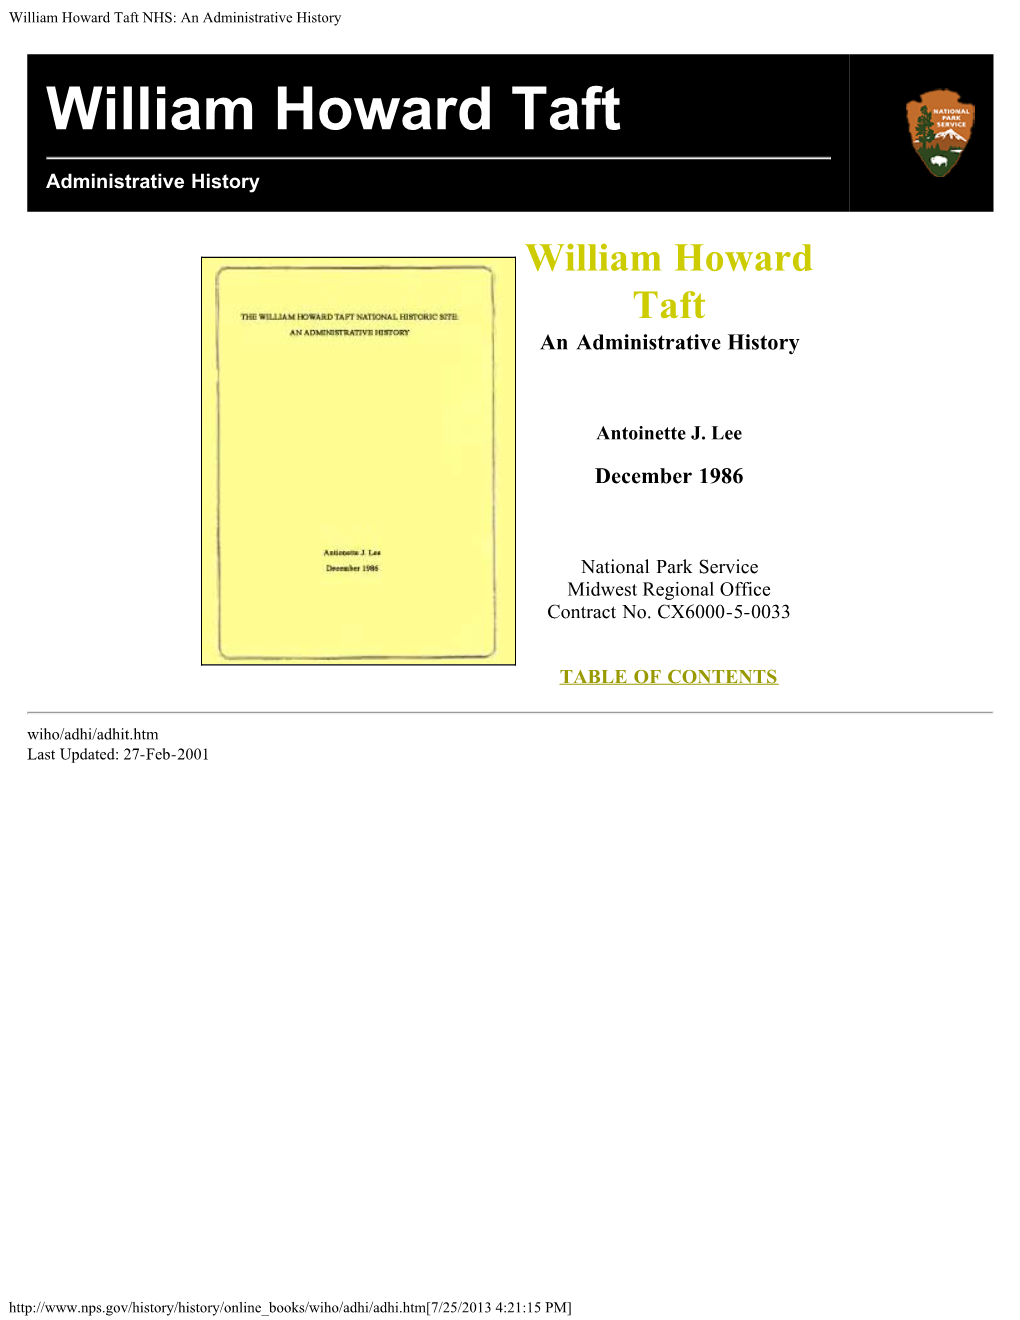 William Howard Taft NHS: an Administrative History